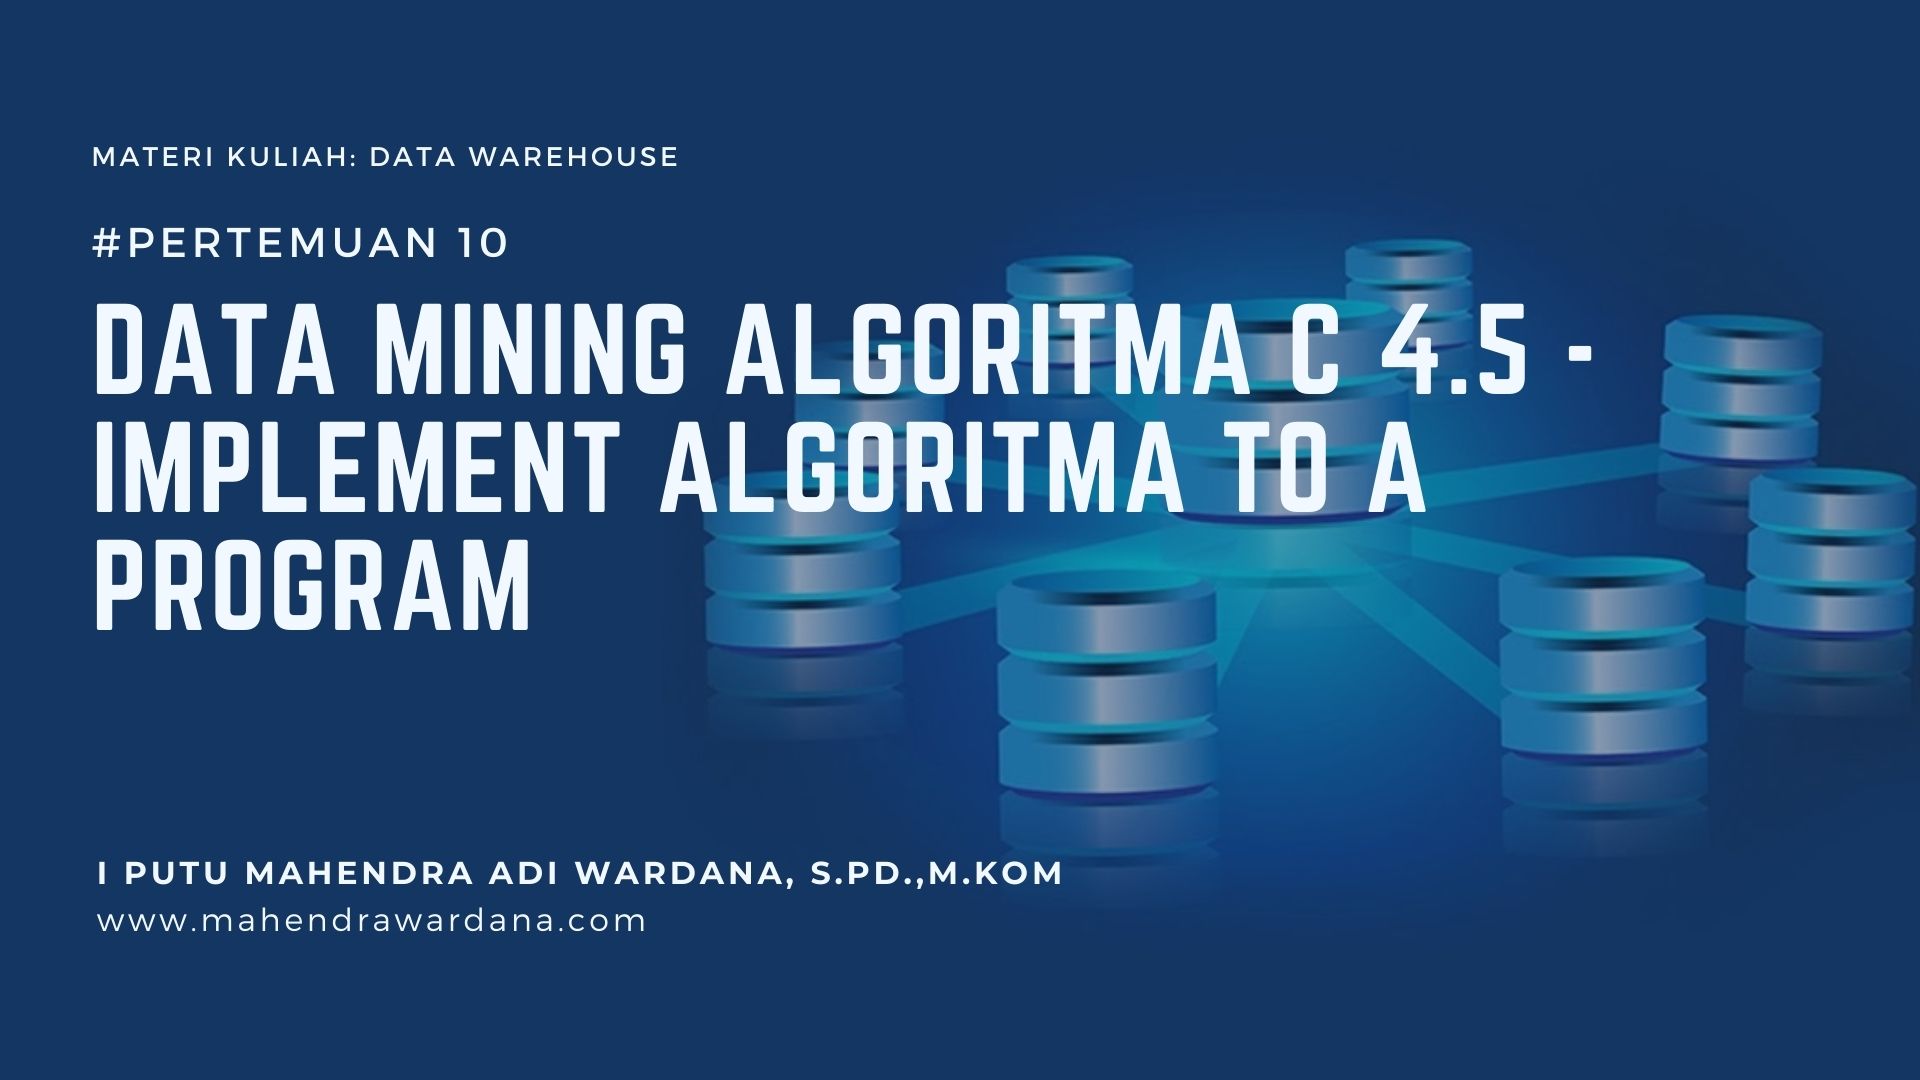 Pertemuan 10 - Data Mining Algoritma C 4.5 - Implement Algoritma to a Program